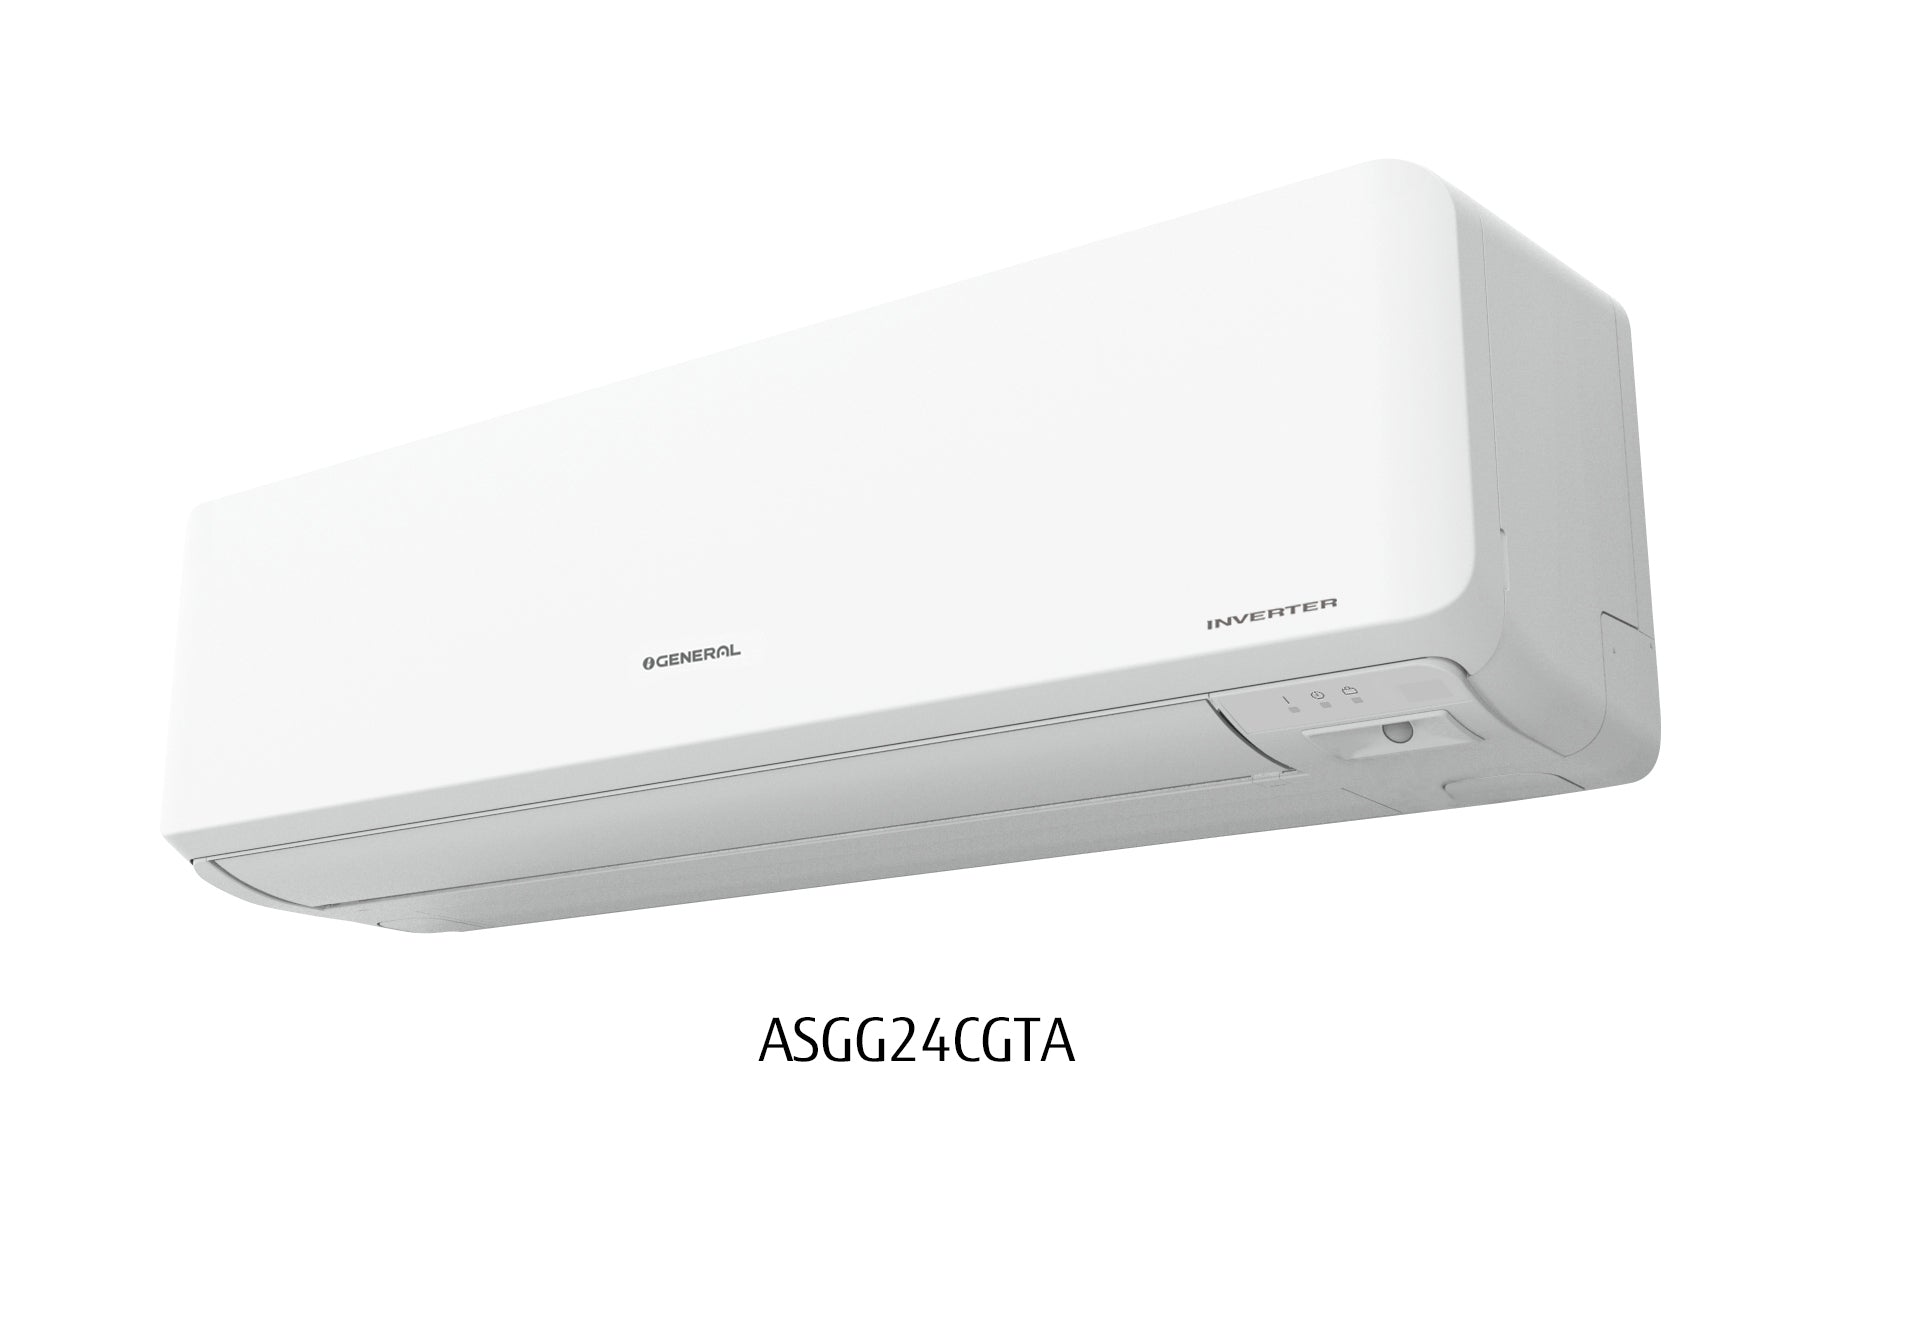 OGENERAL Inverter 2 Ton Split Air Conditioners ASGG24CGTA 5 Star - Mahajan Electronics Online